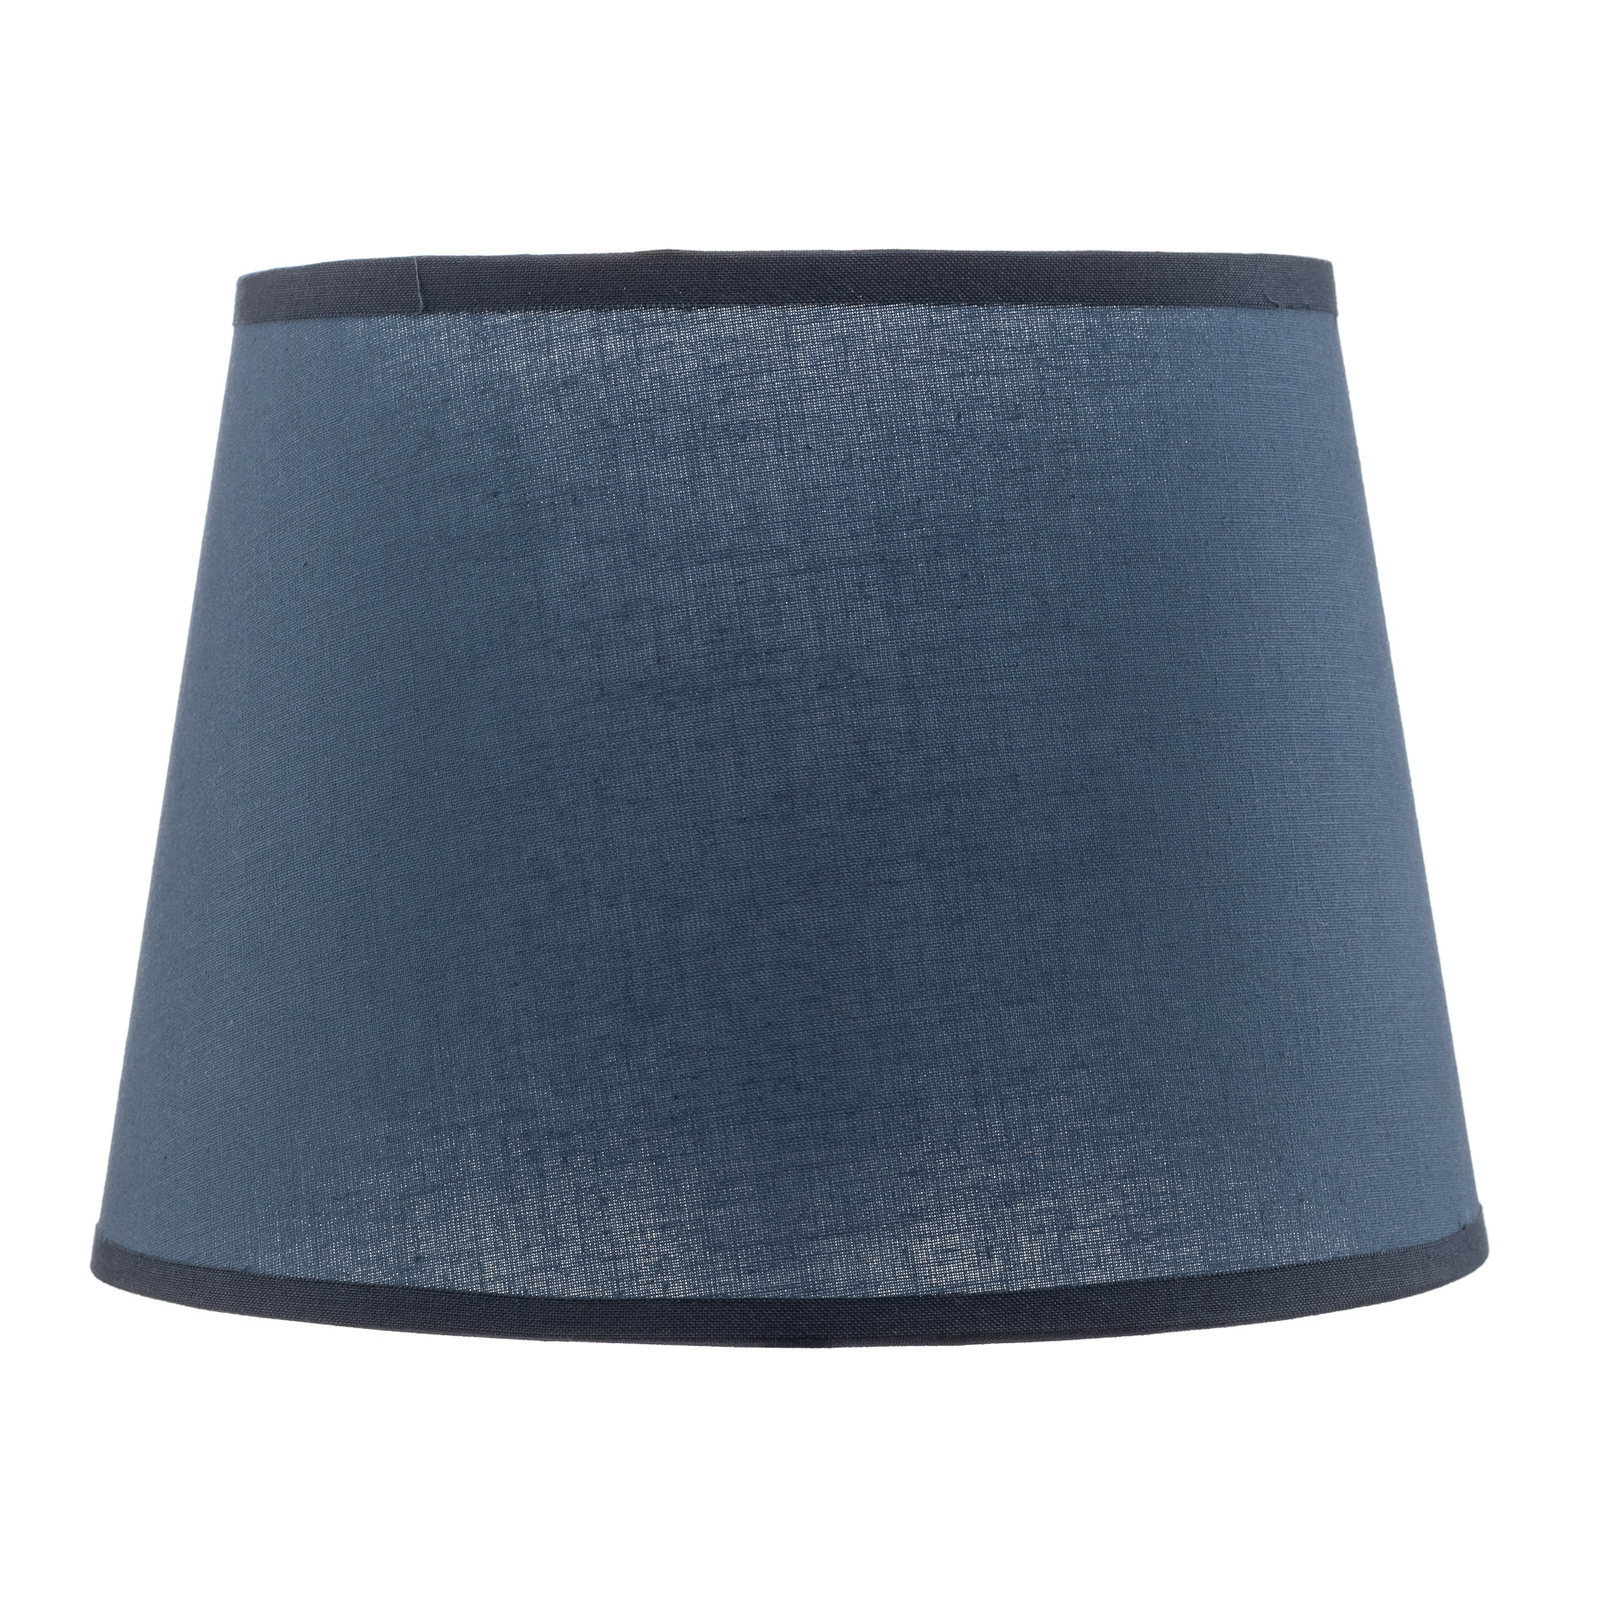 Classic S lampshade, dark blue